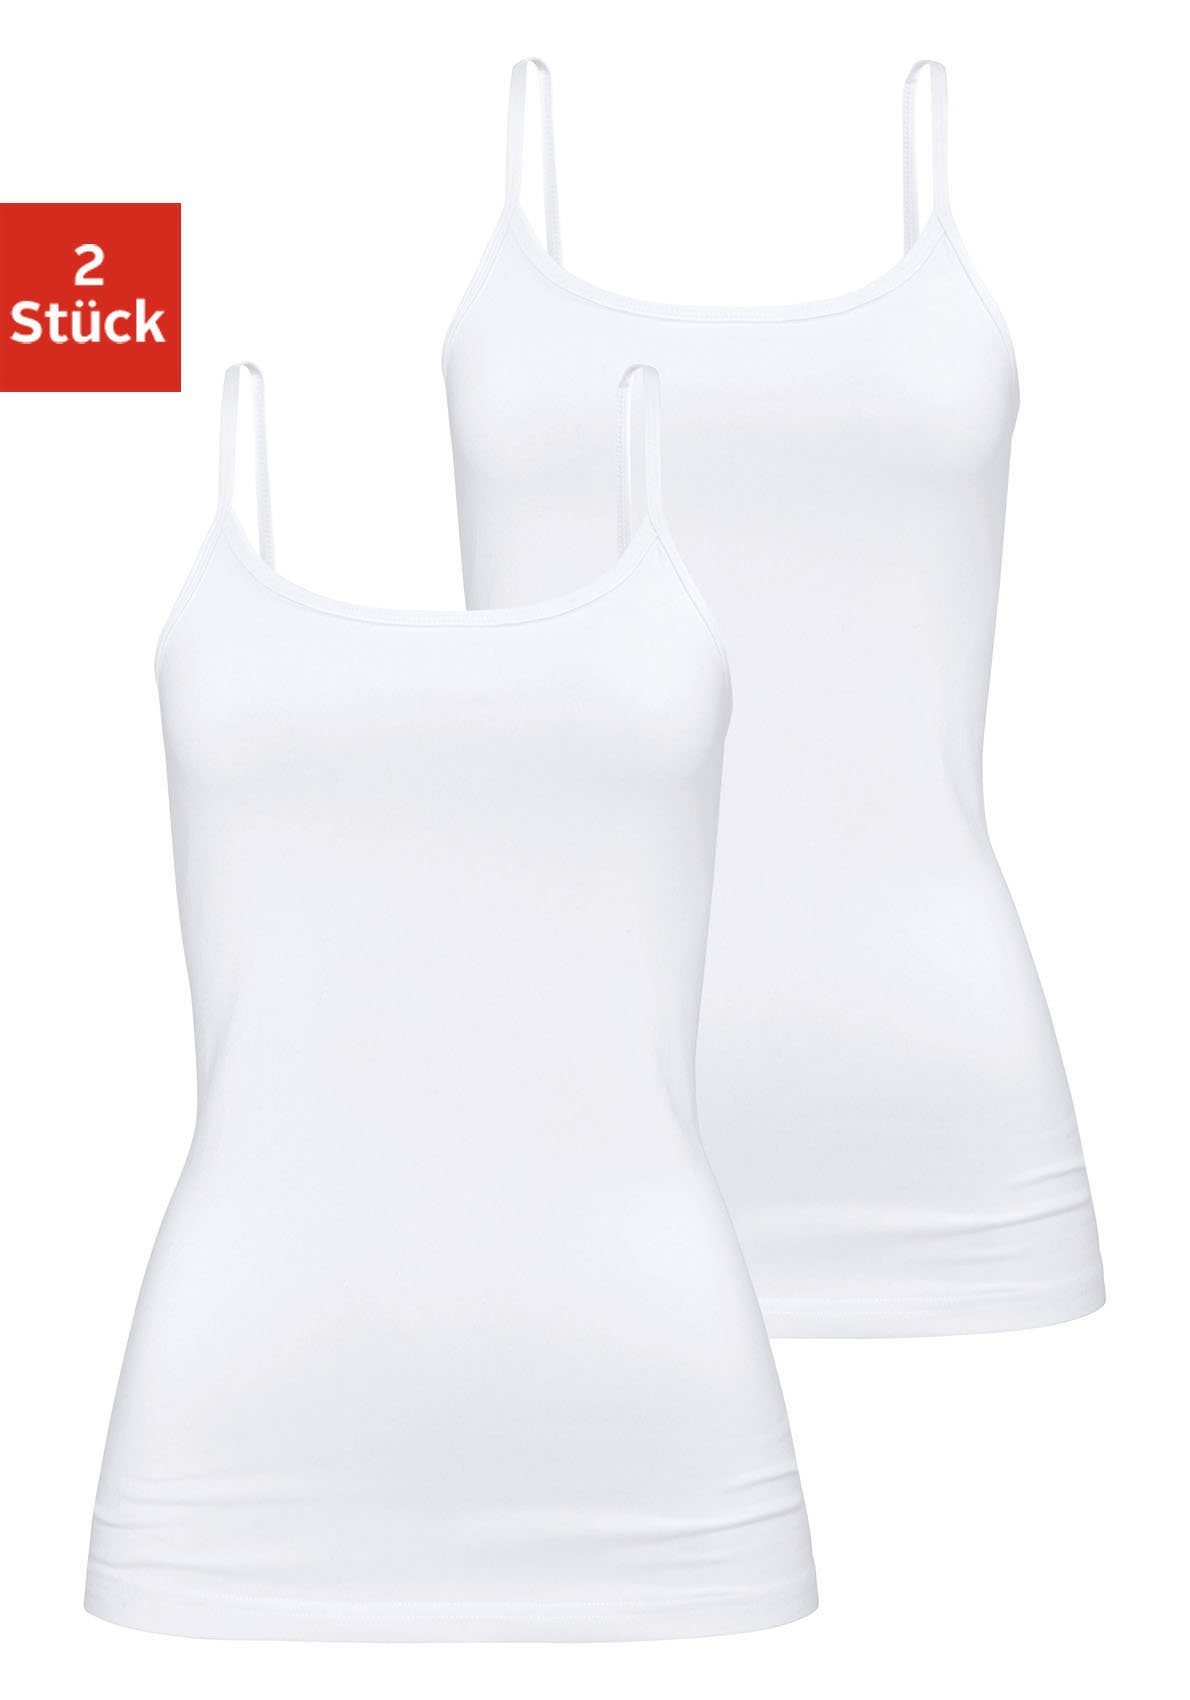 H.I.S Unterhemd (2er-Pack) aus elastischer Unterziehshirt Spaghettiträger-Top, Baumwoll-Qualität, weiß